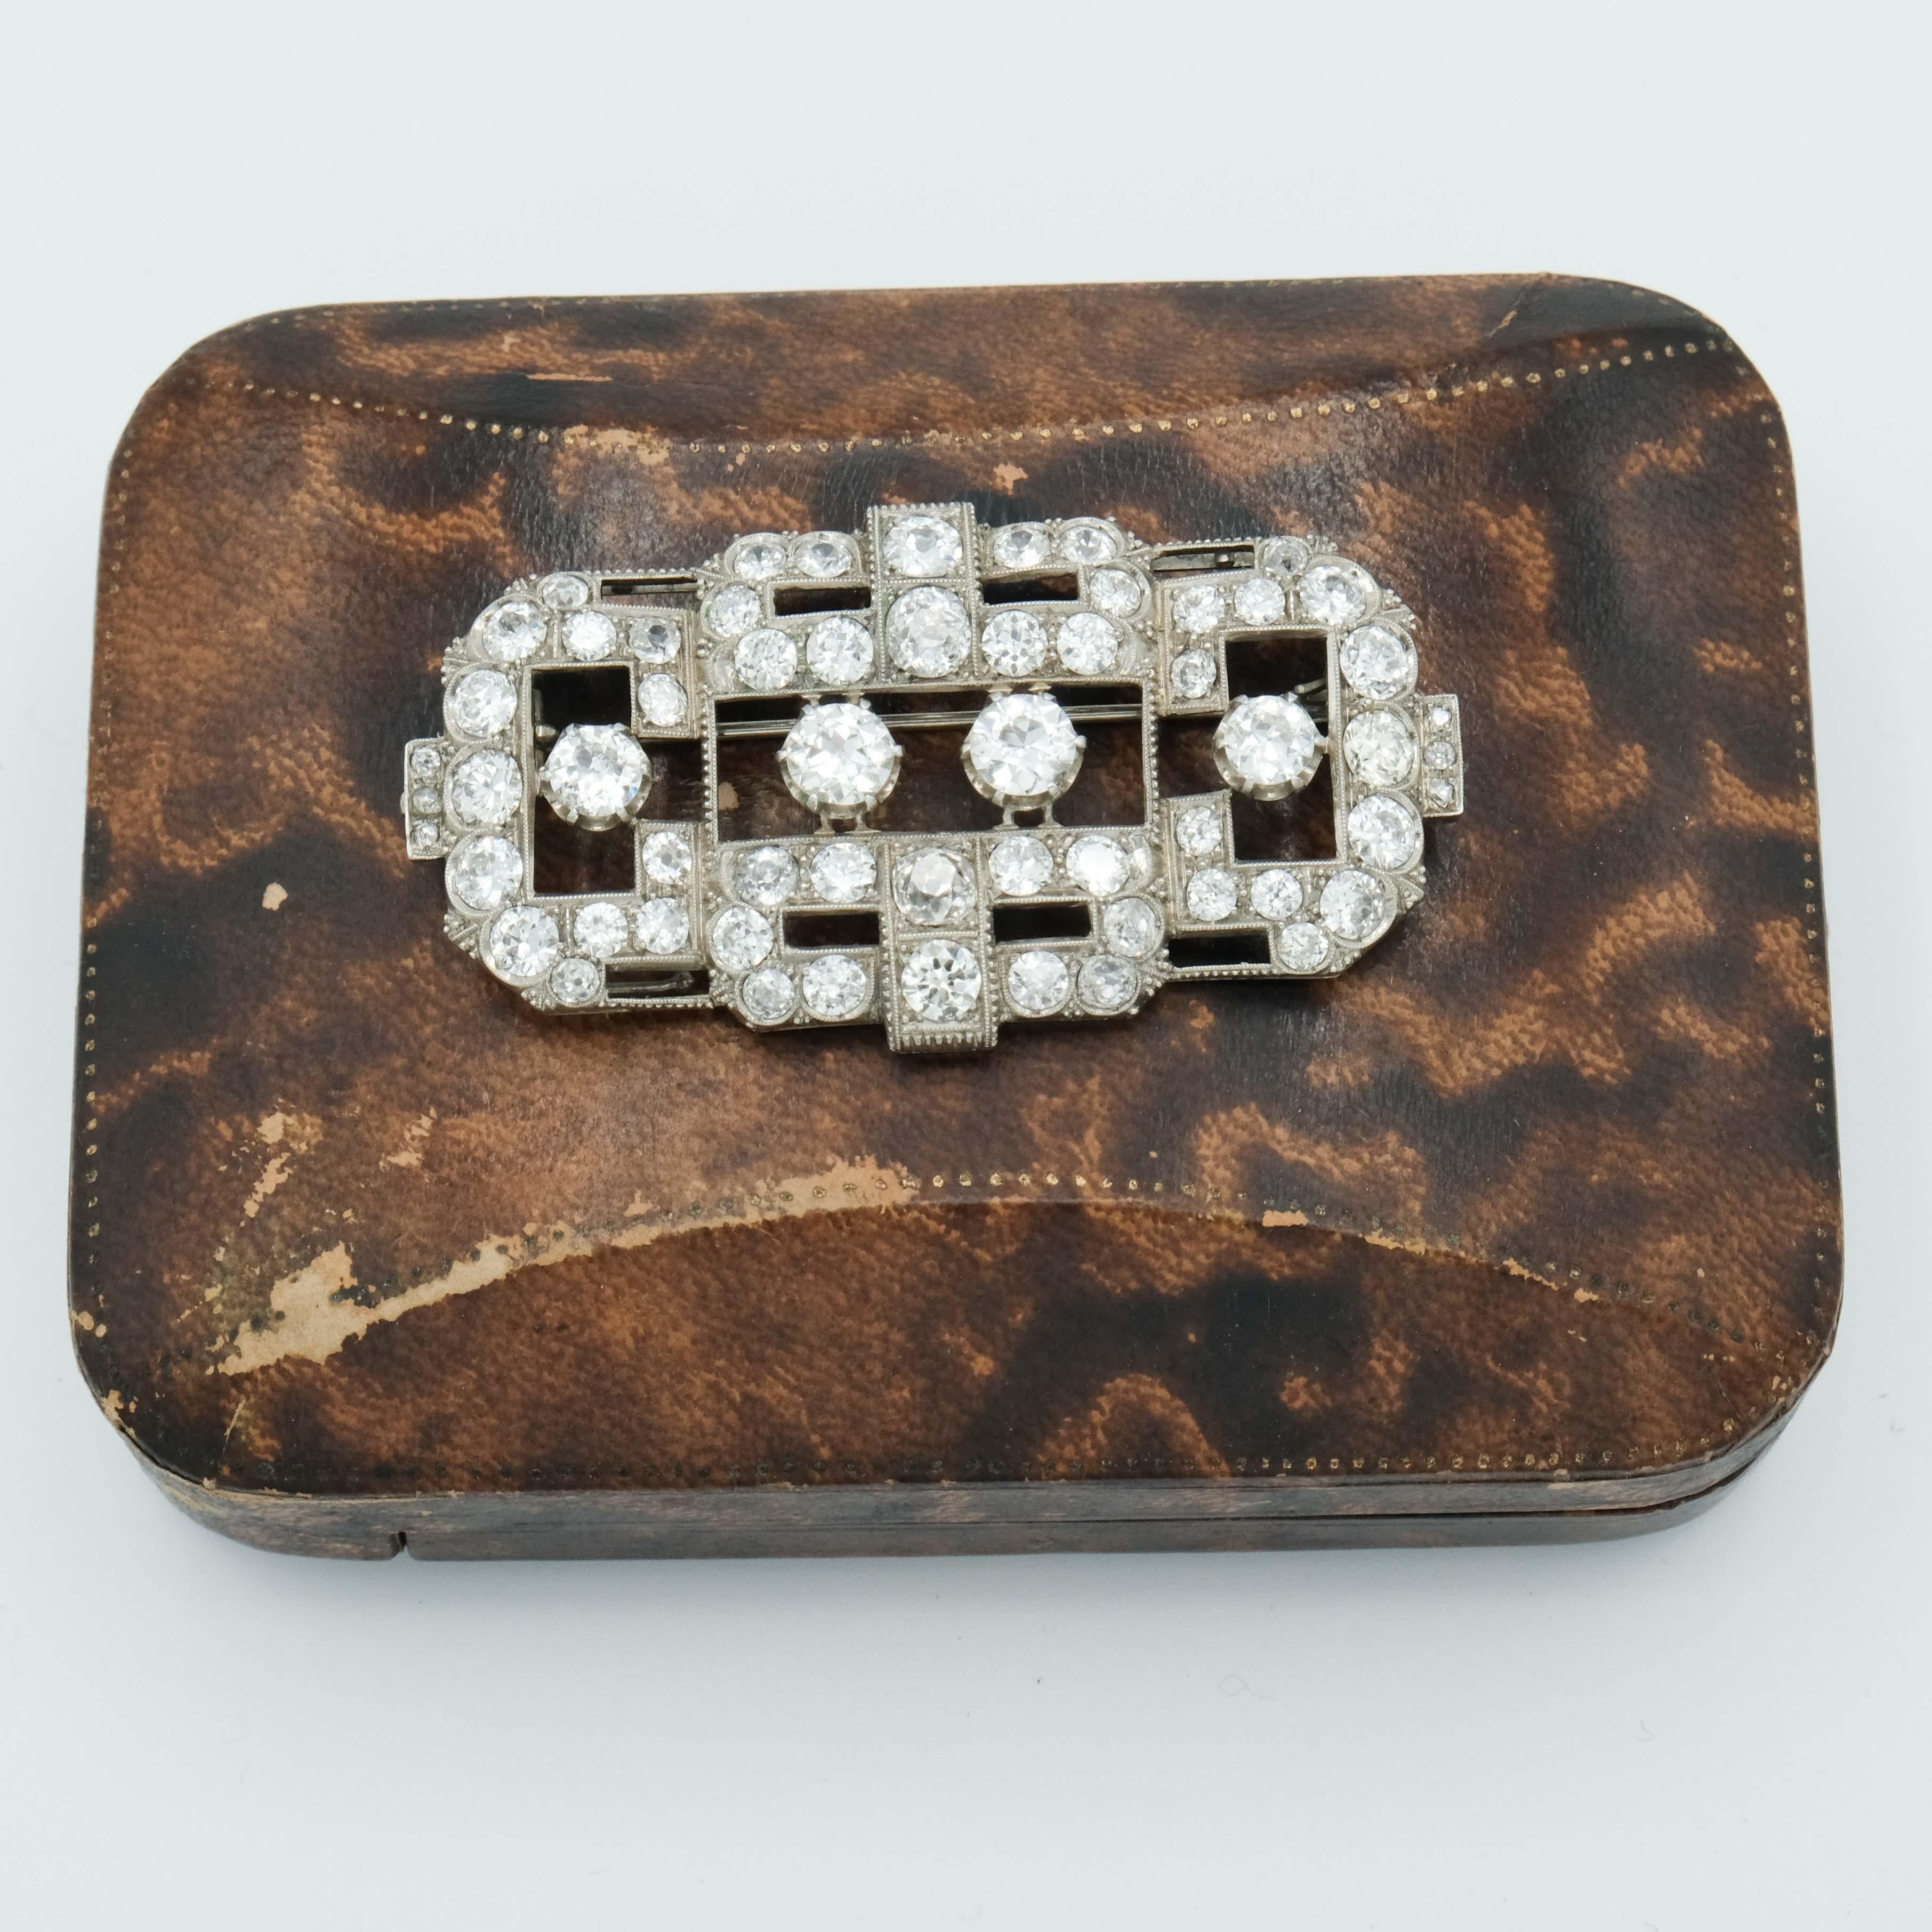 Art Deco' Diamonds 14 ct Platinum Brooch with chain for pendant. long 90cm.
central diamonds 0,80 each